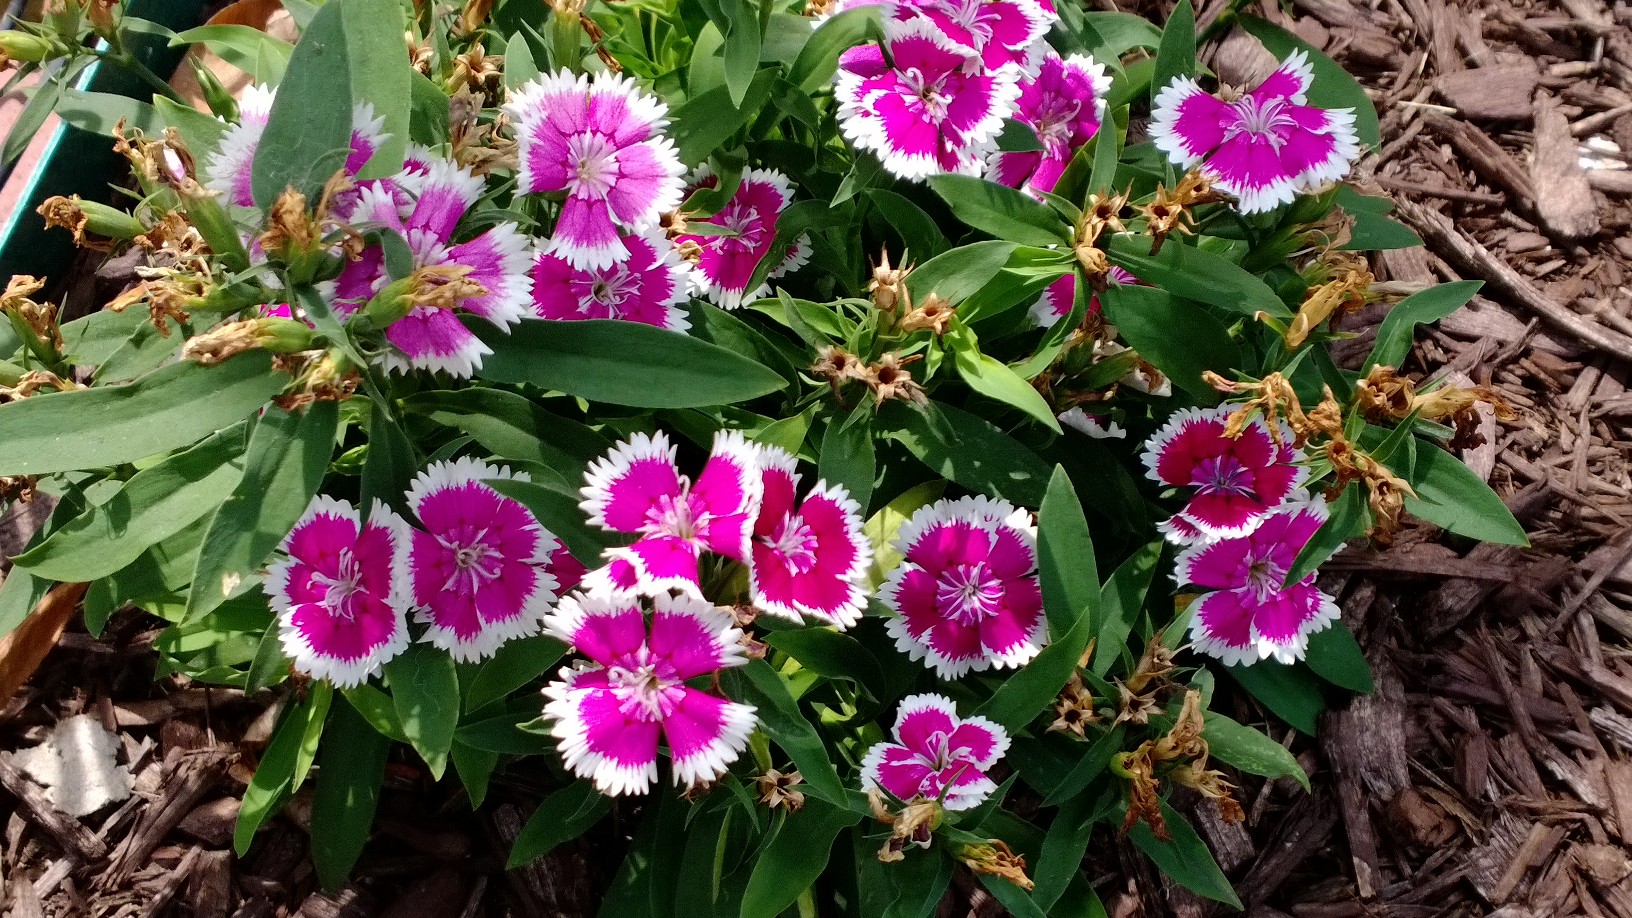 Flowers via AT&T Nokia Lumia 1020